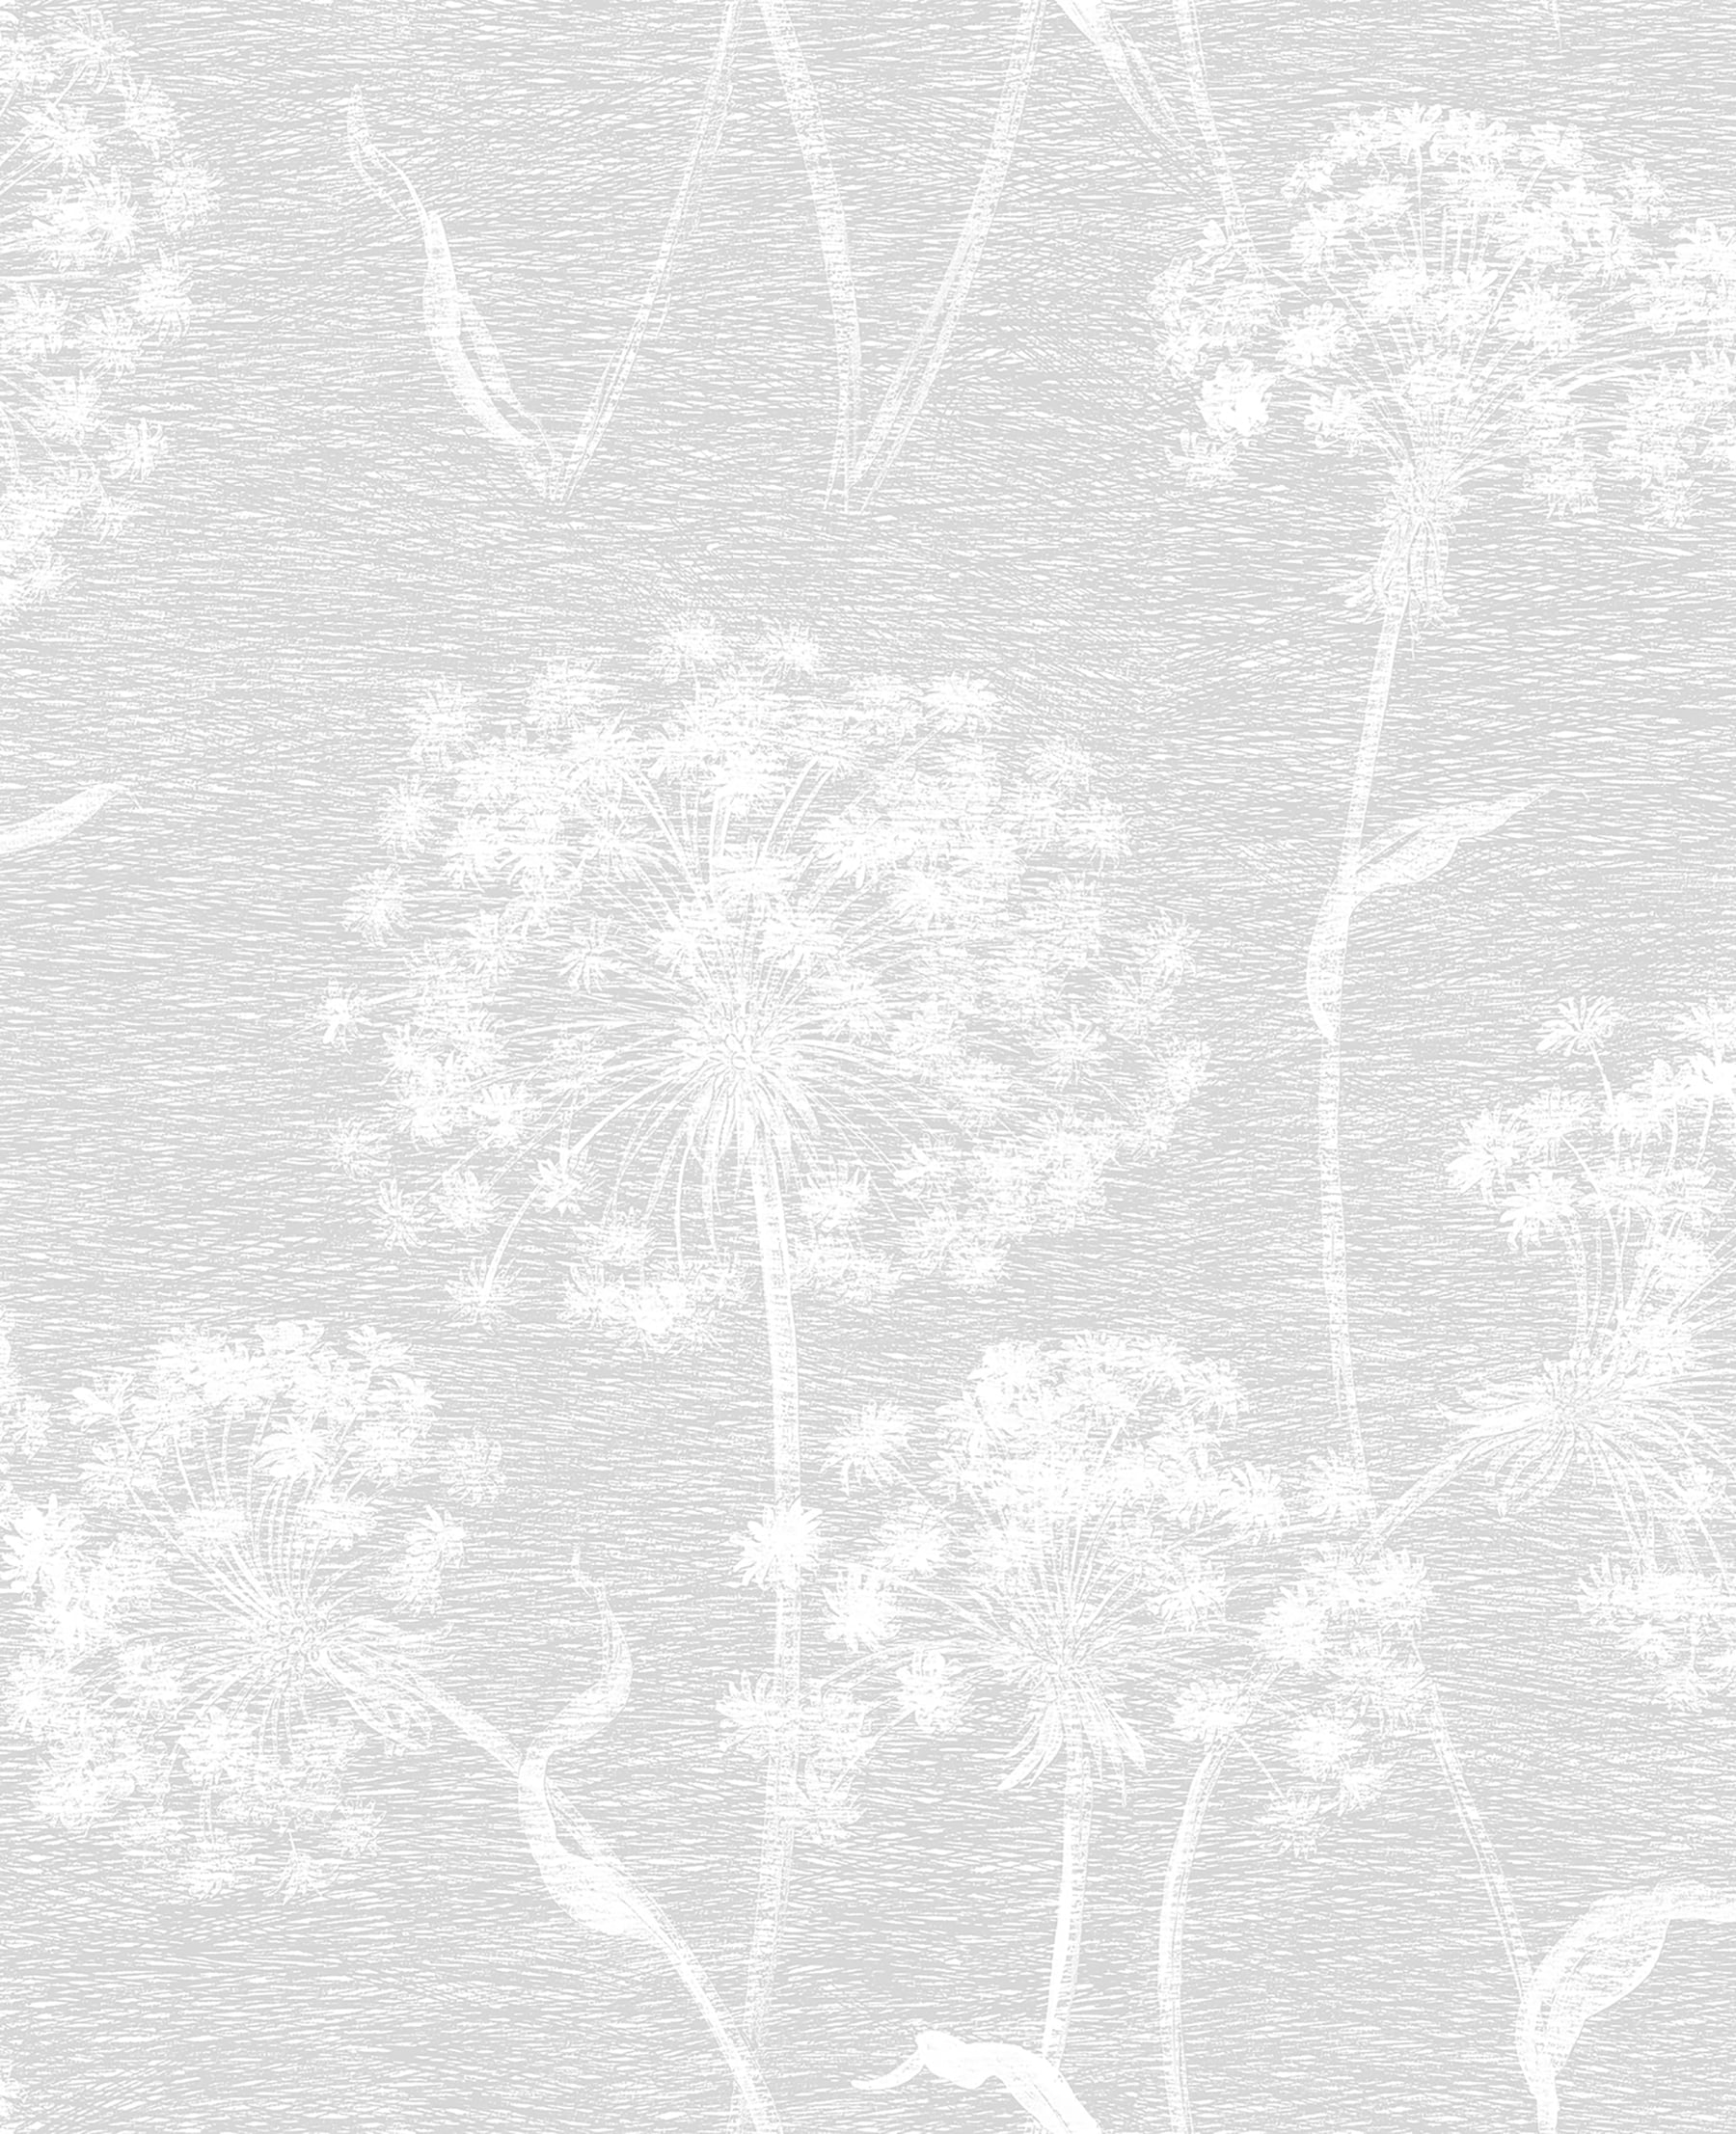 Advantage Garvey Light Grey Dandelion Wallpaper in the Wallpaper department at Lowes.com